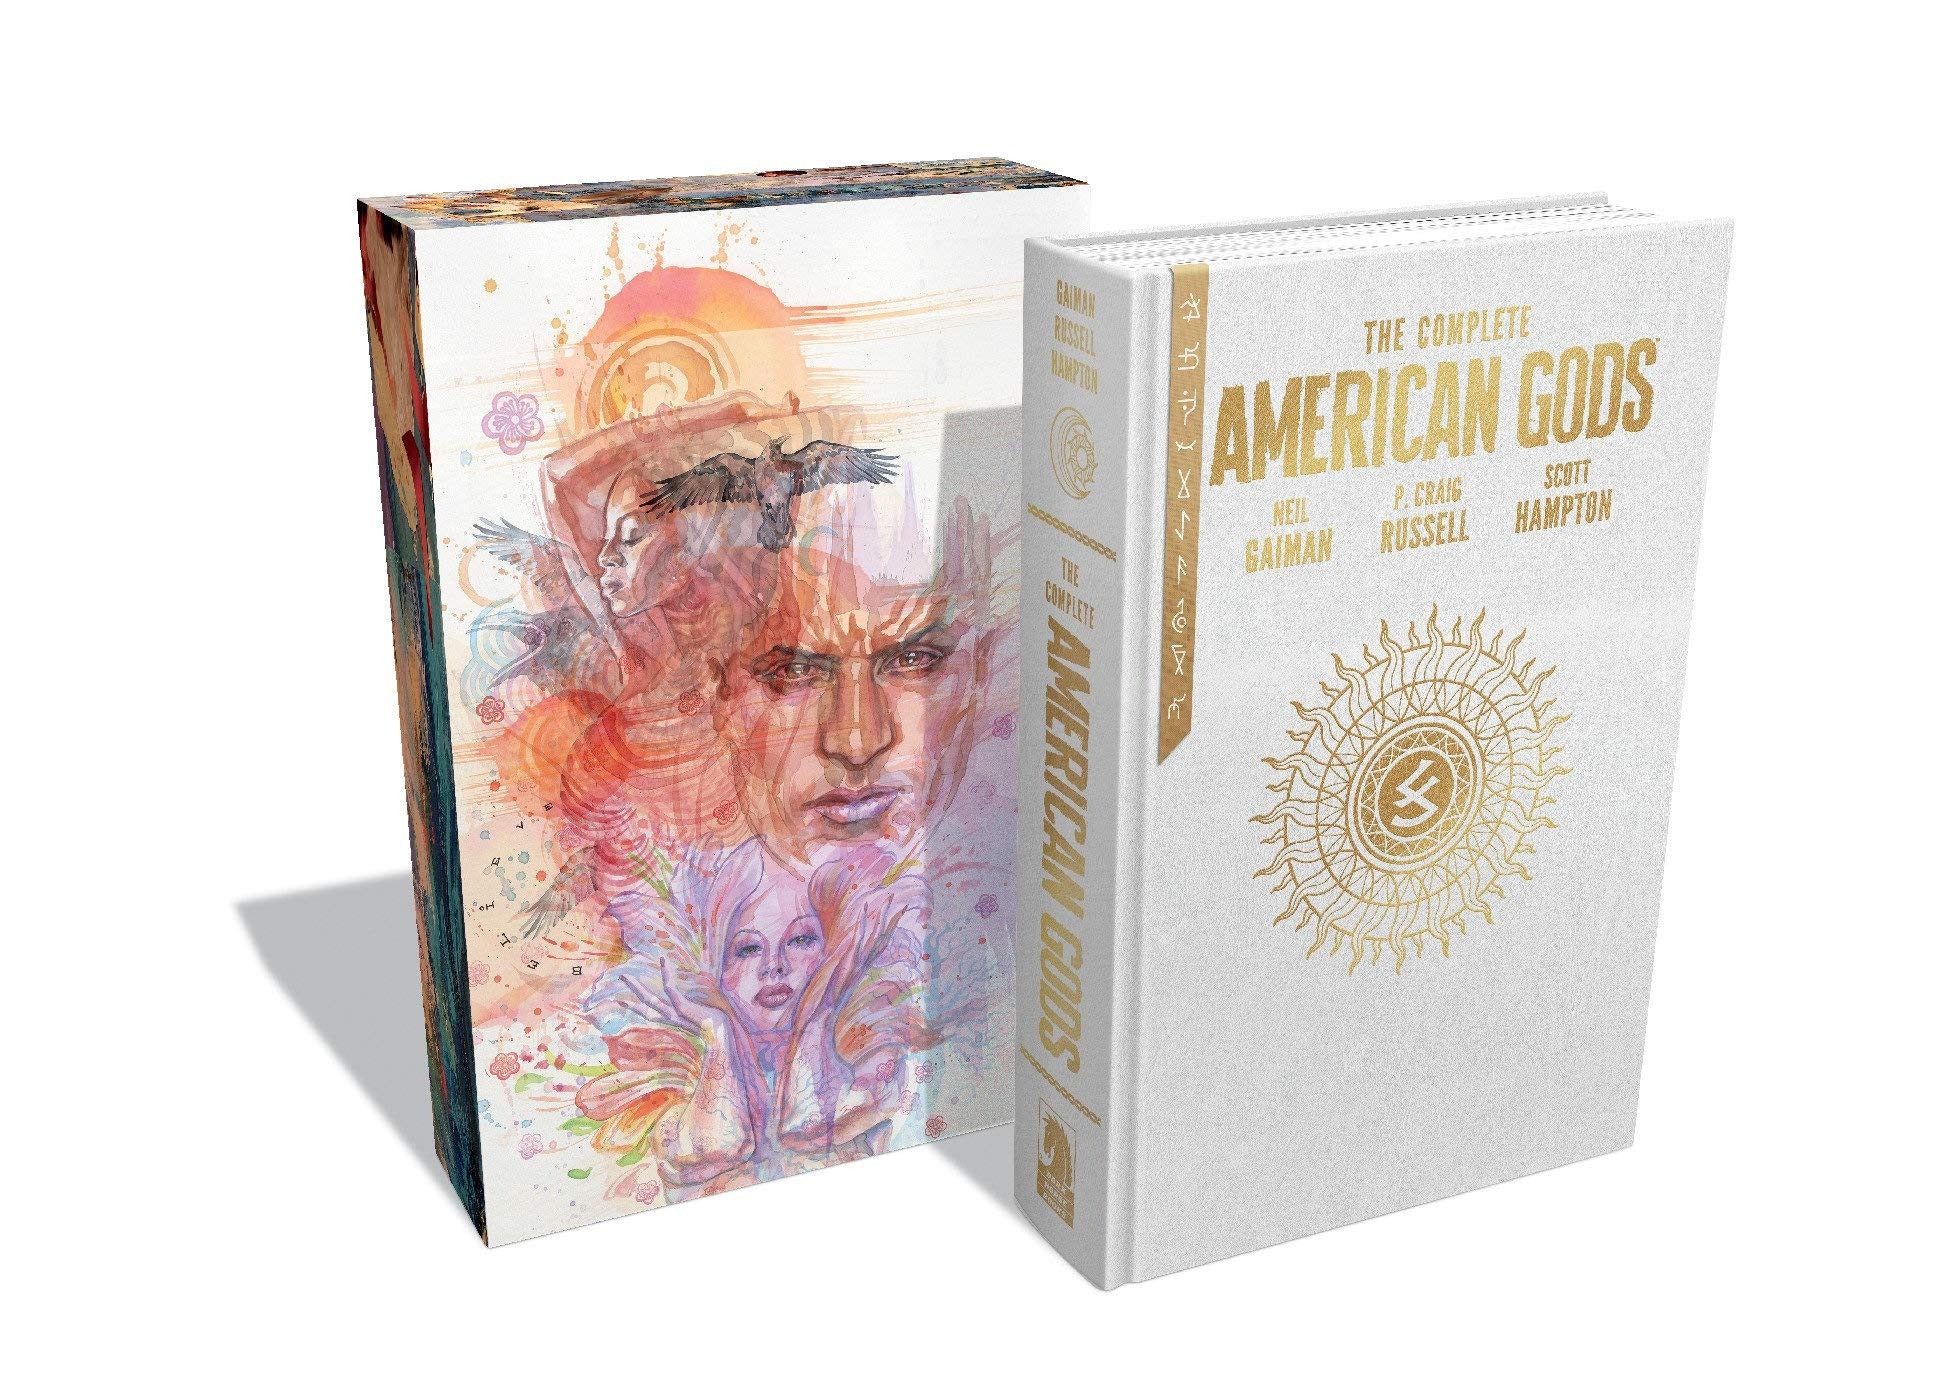 The Complete American Gods (Graphic Novel) Slipcased Hardcover by Neil Gaiman (SHORT-TERM PREORDER)